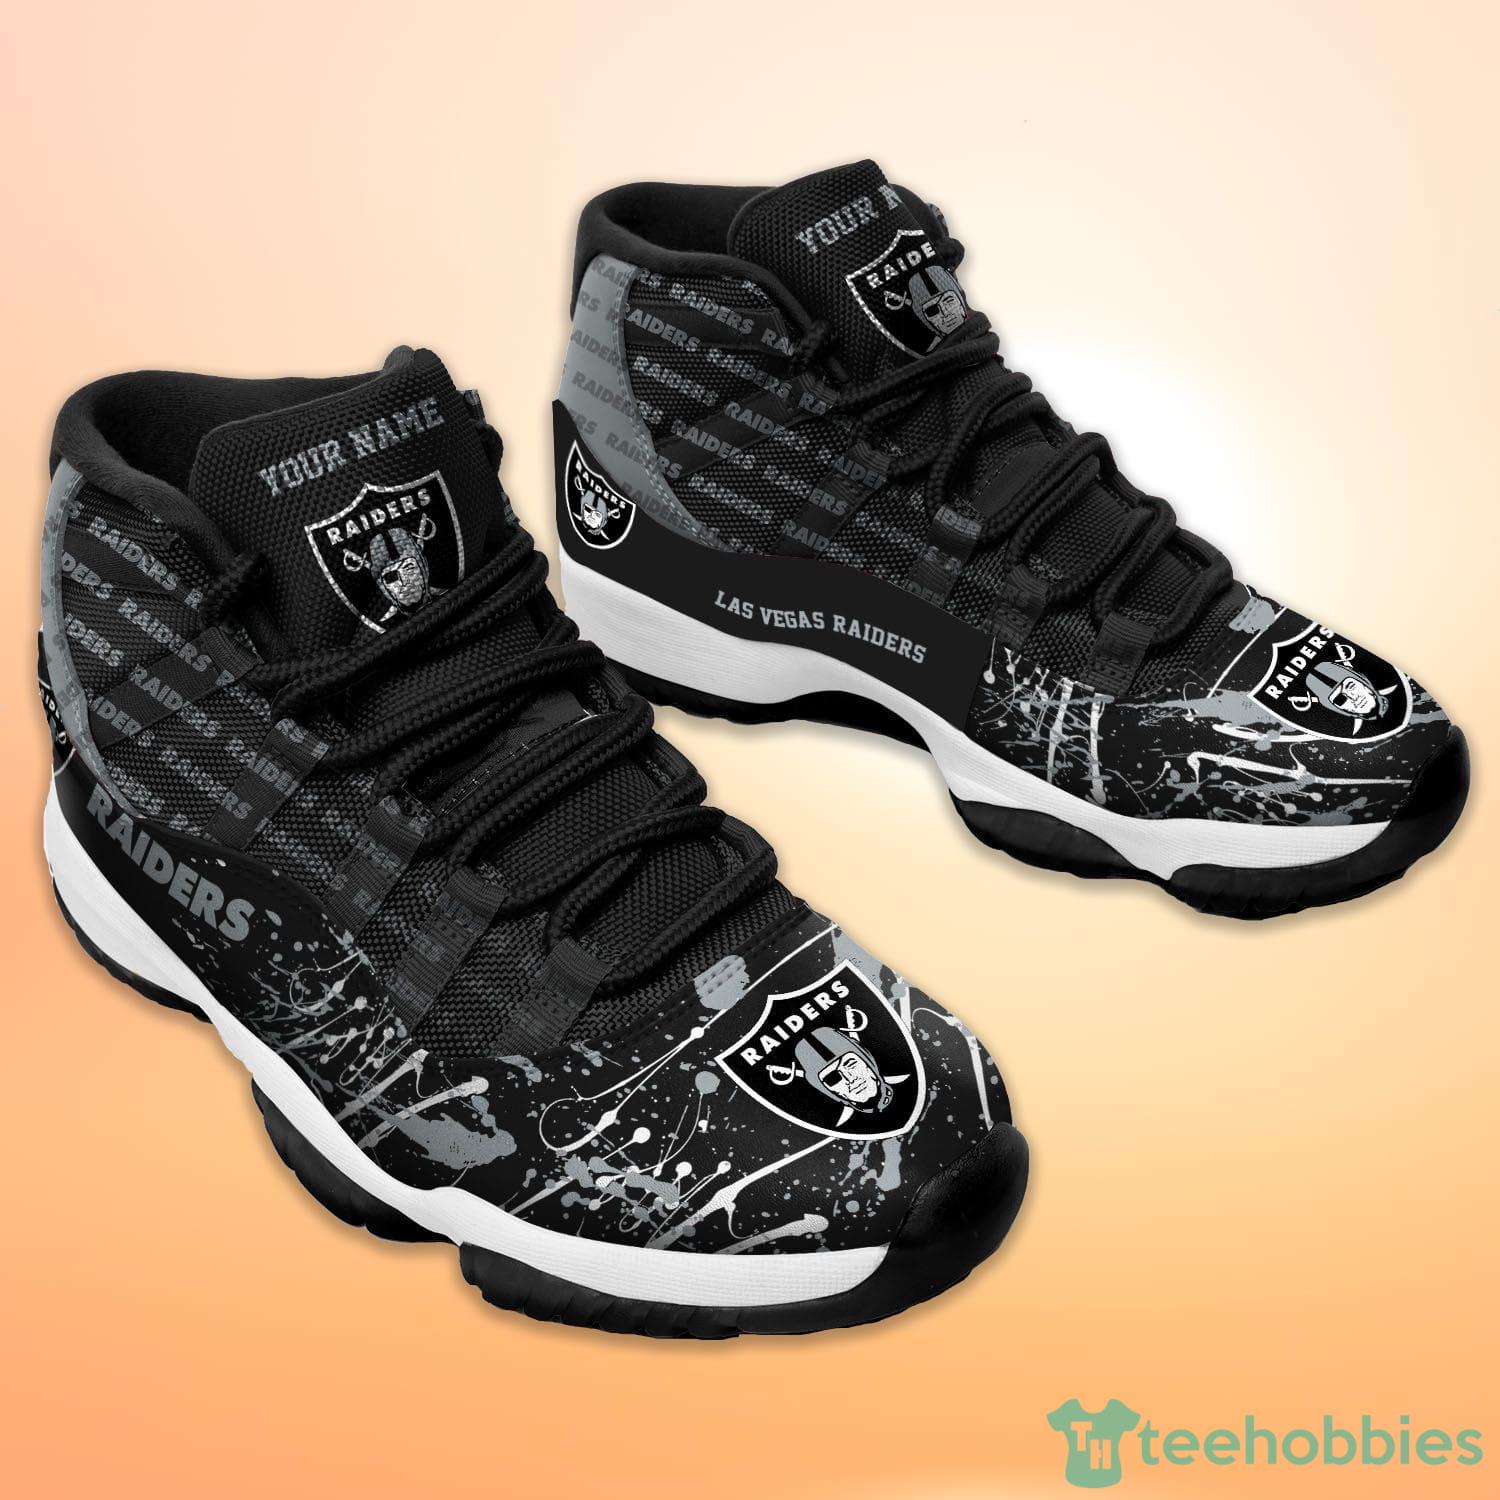 Las Vegas Raiders NFL Personalized Air Jordan 11 Shoes Sneaker - Growkoc